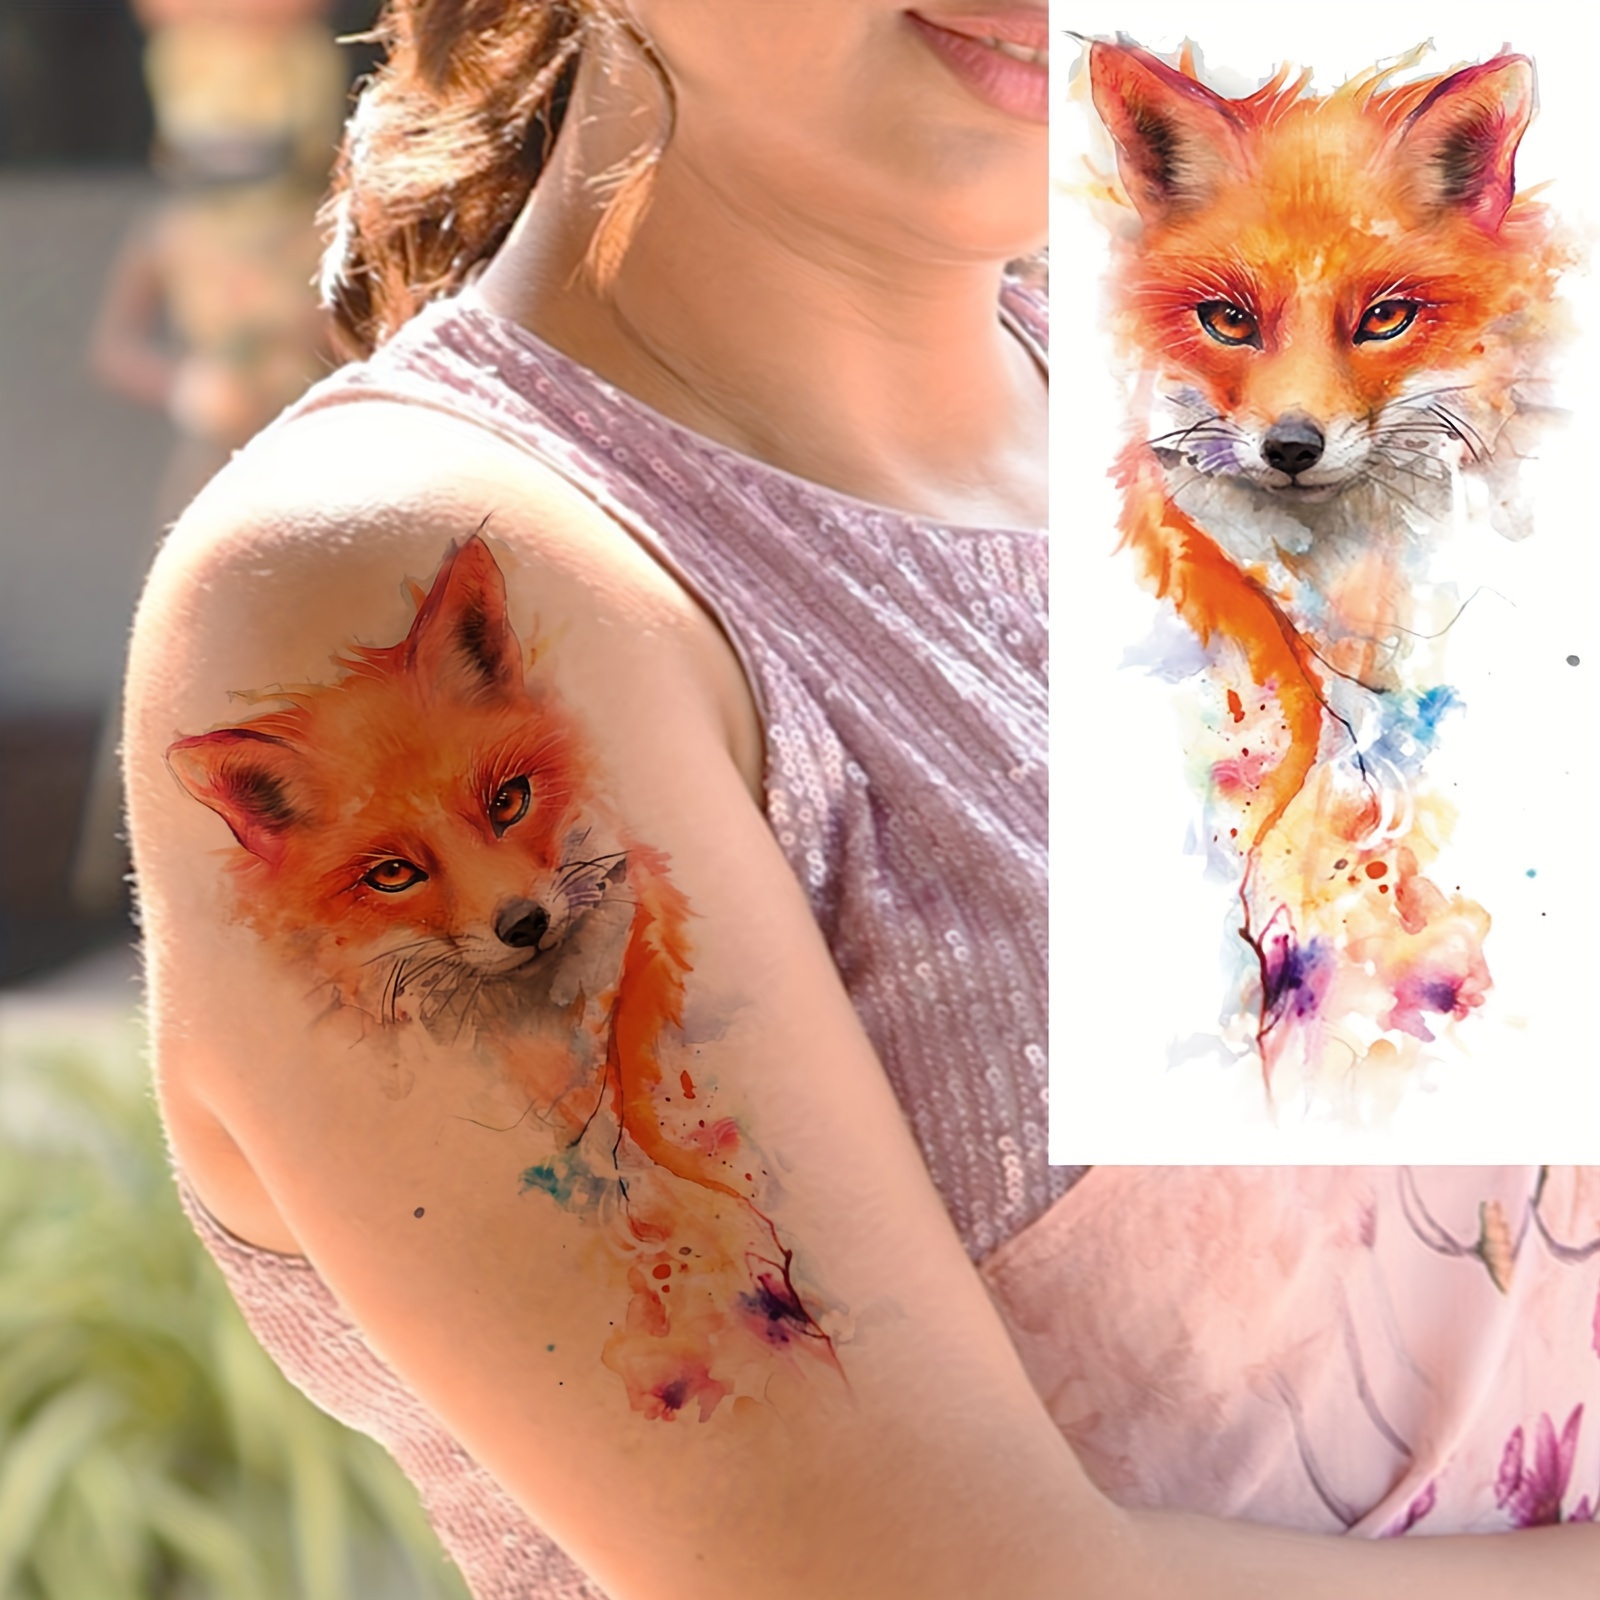 

Watercolor Fox Temporary Tattoo Sticker For Women, 1 Sheet, Adult Arm Leg Waterproof Fake Tattoo, Long-lasting Watercolor Fox Design Body Art Decal, Oblong Shape